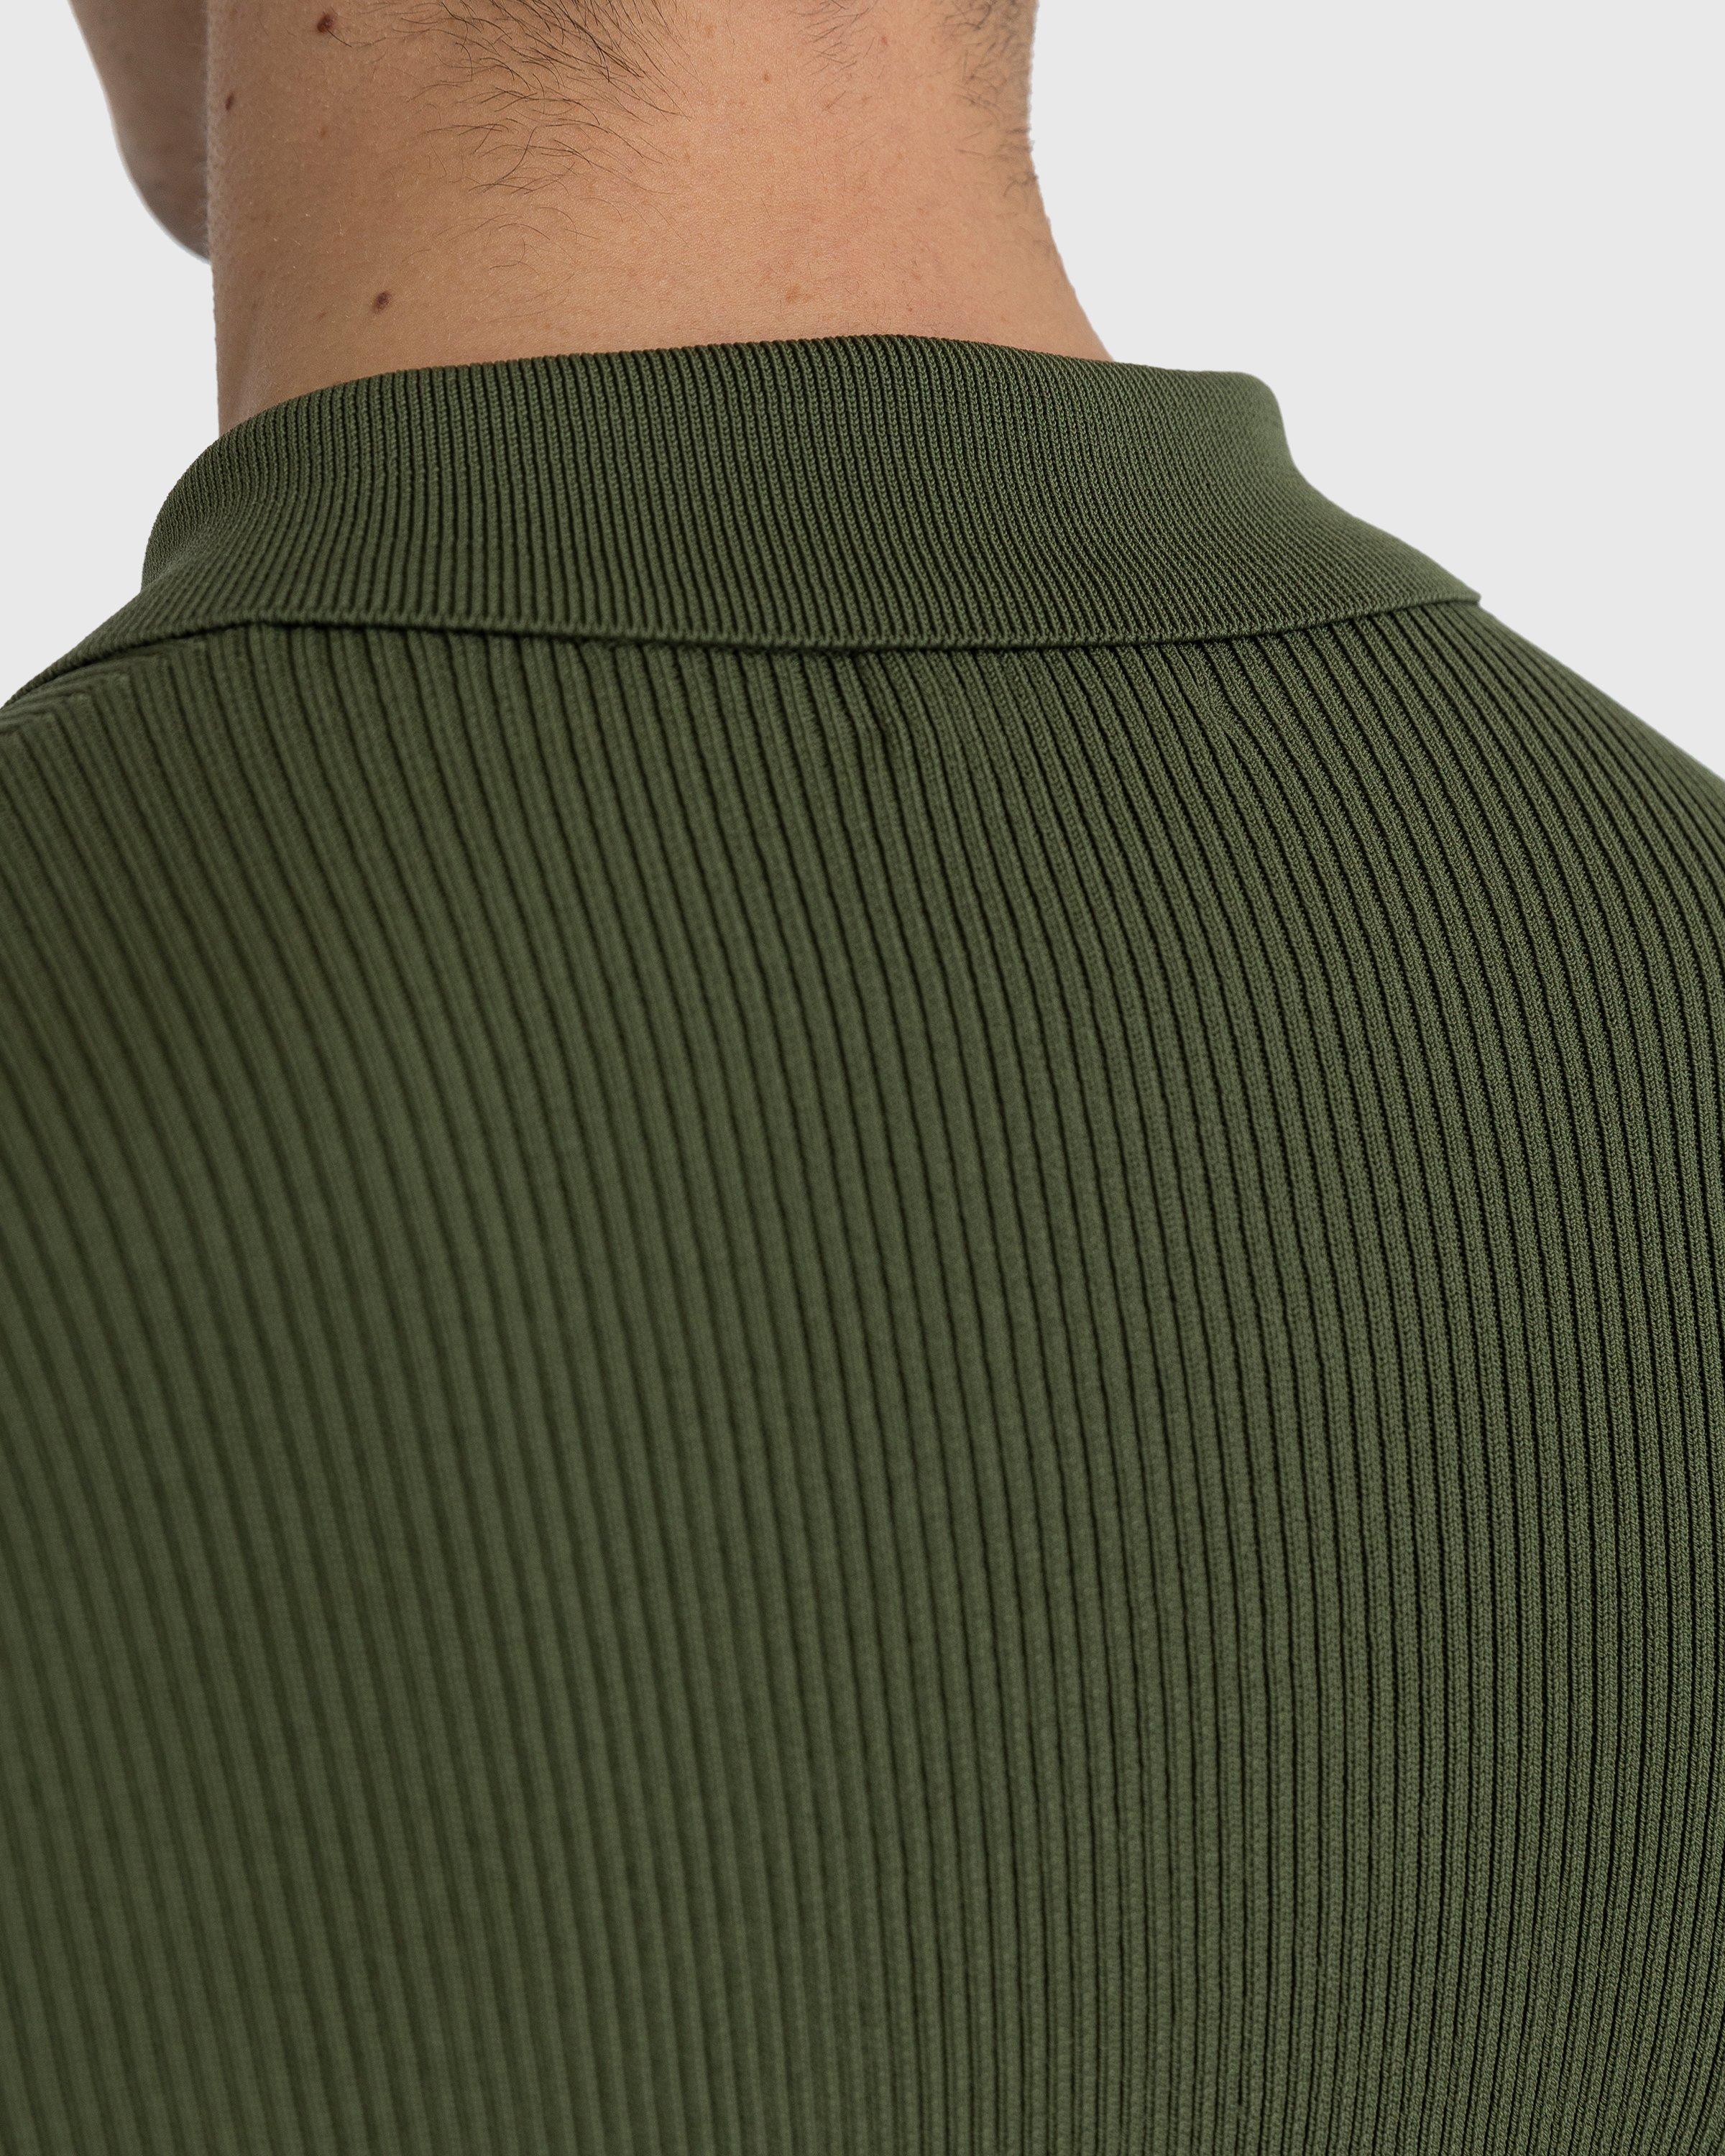 Dries van Noten - Neil Sweater - Clothing - Green - Image 7